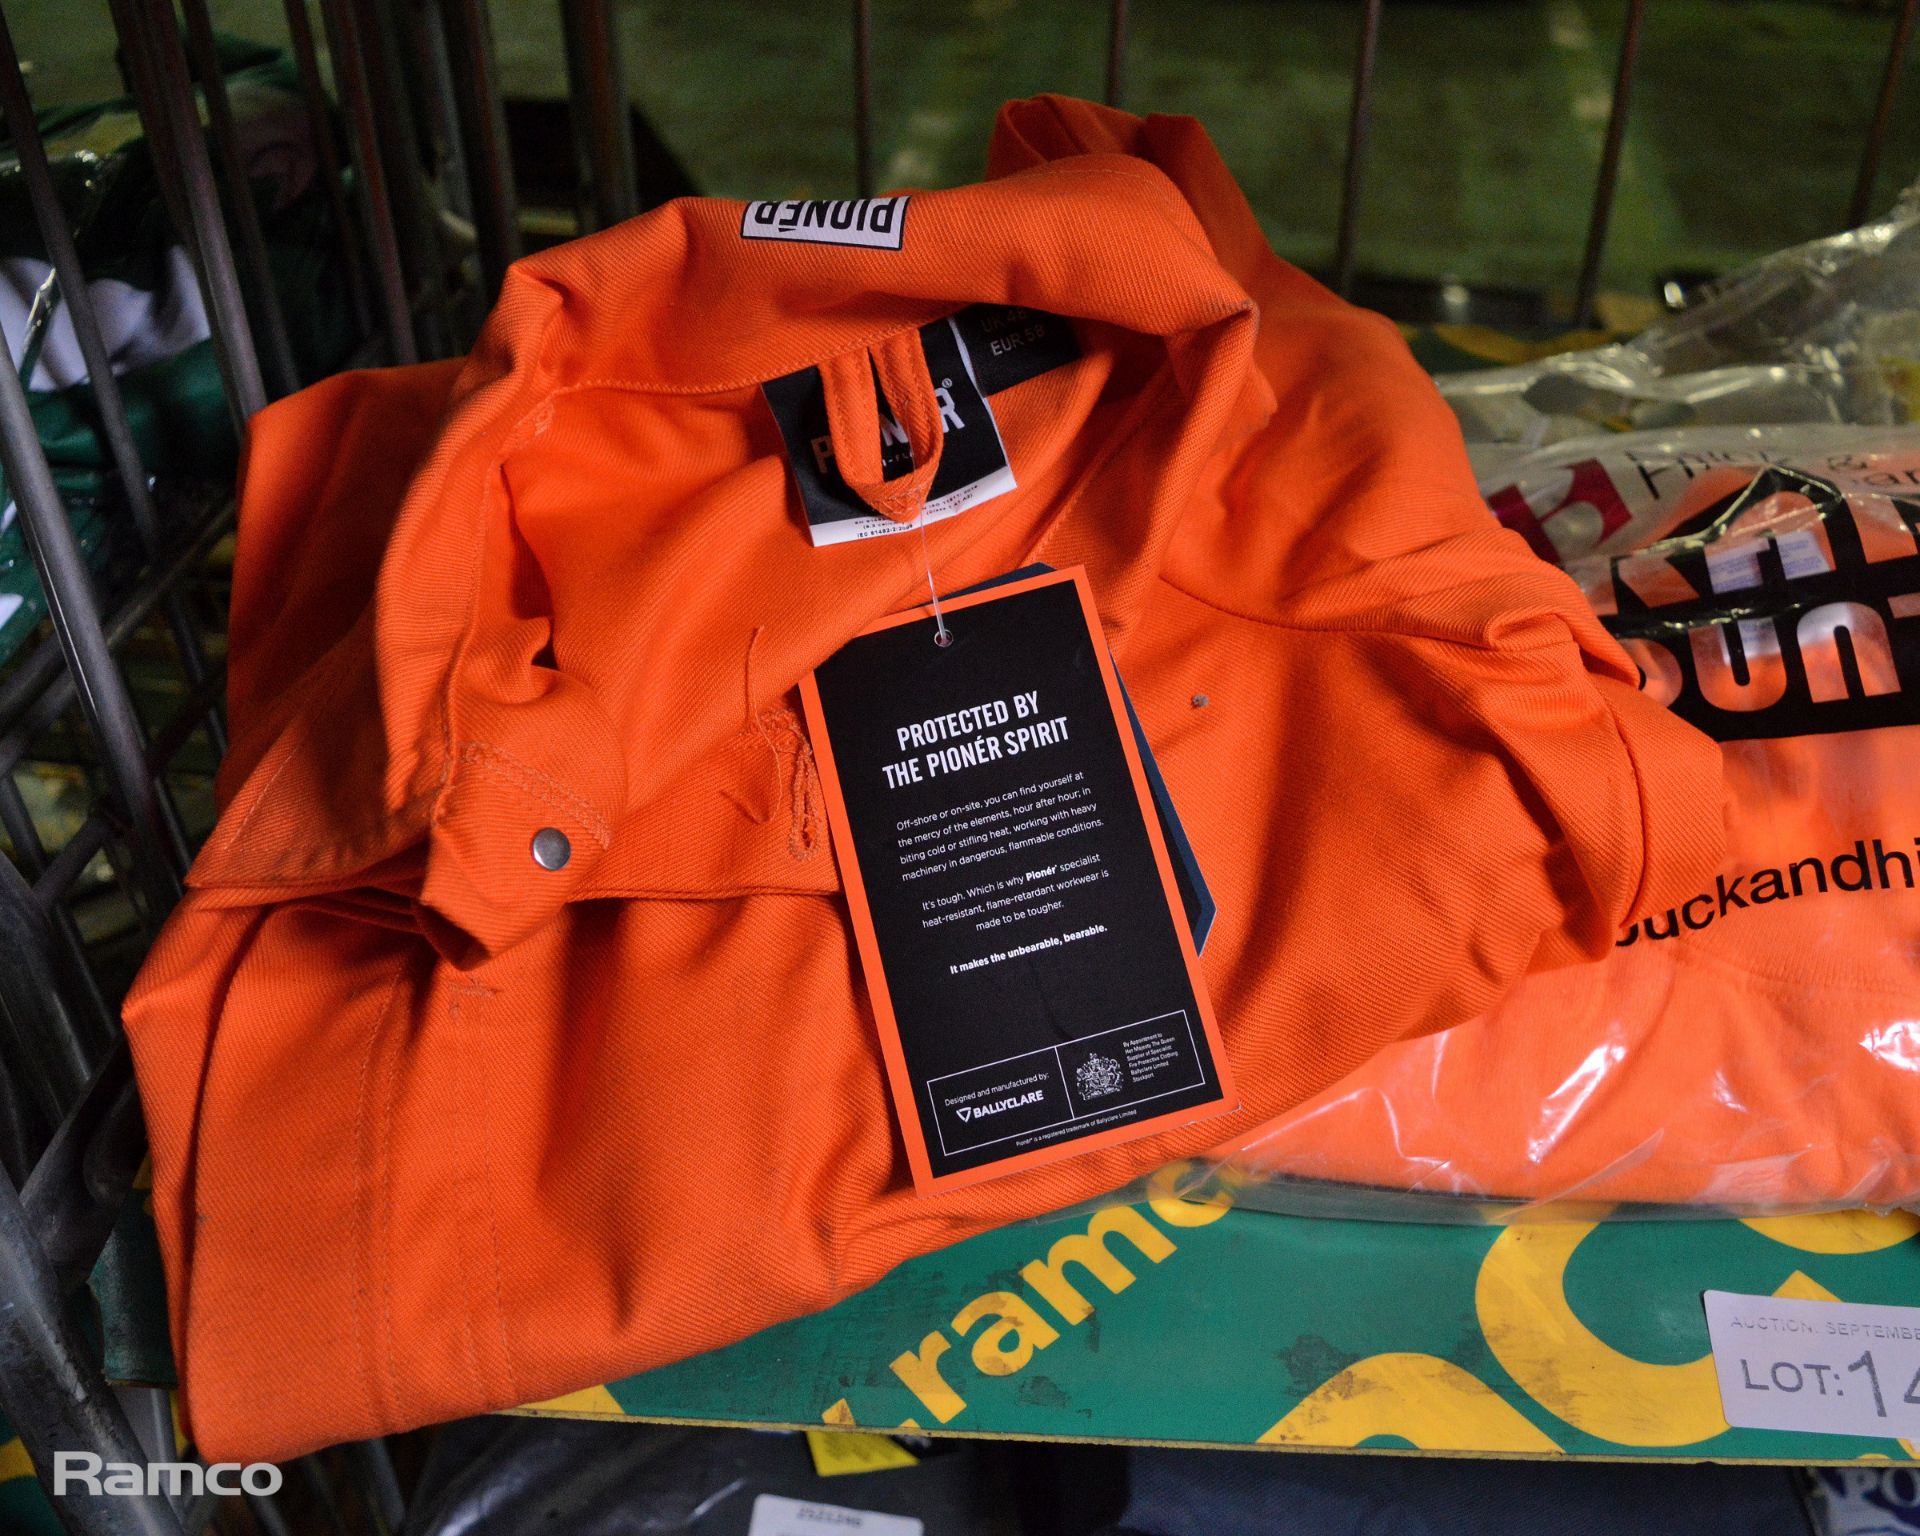 Workwear assortment - Traffic Trousers, Weatherproof trousers, orange work overalls & oran - Image 2 of 5